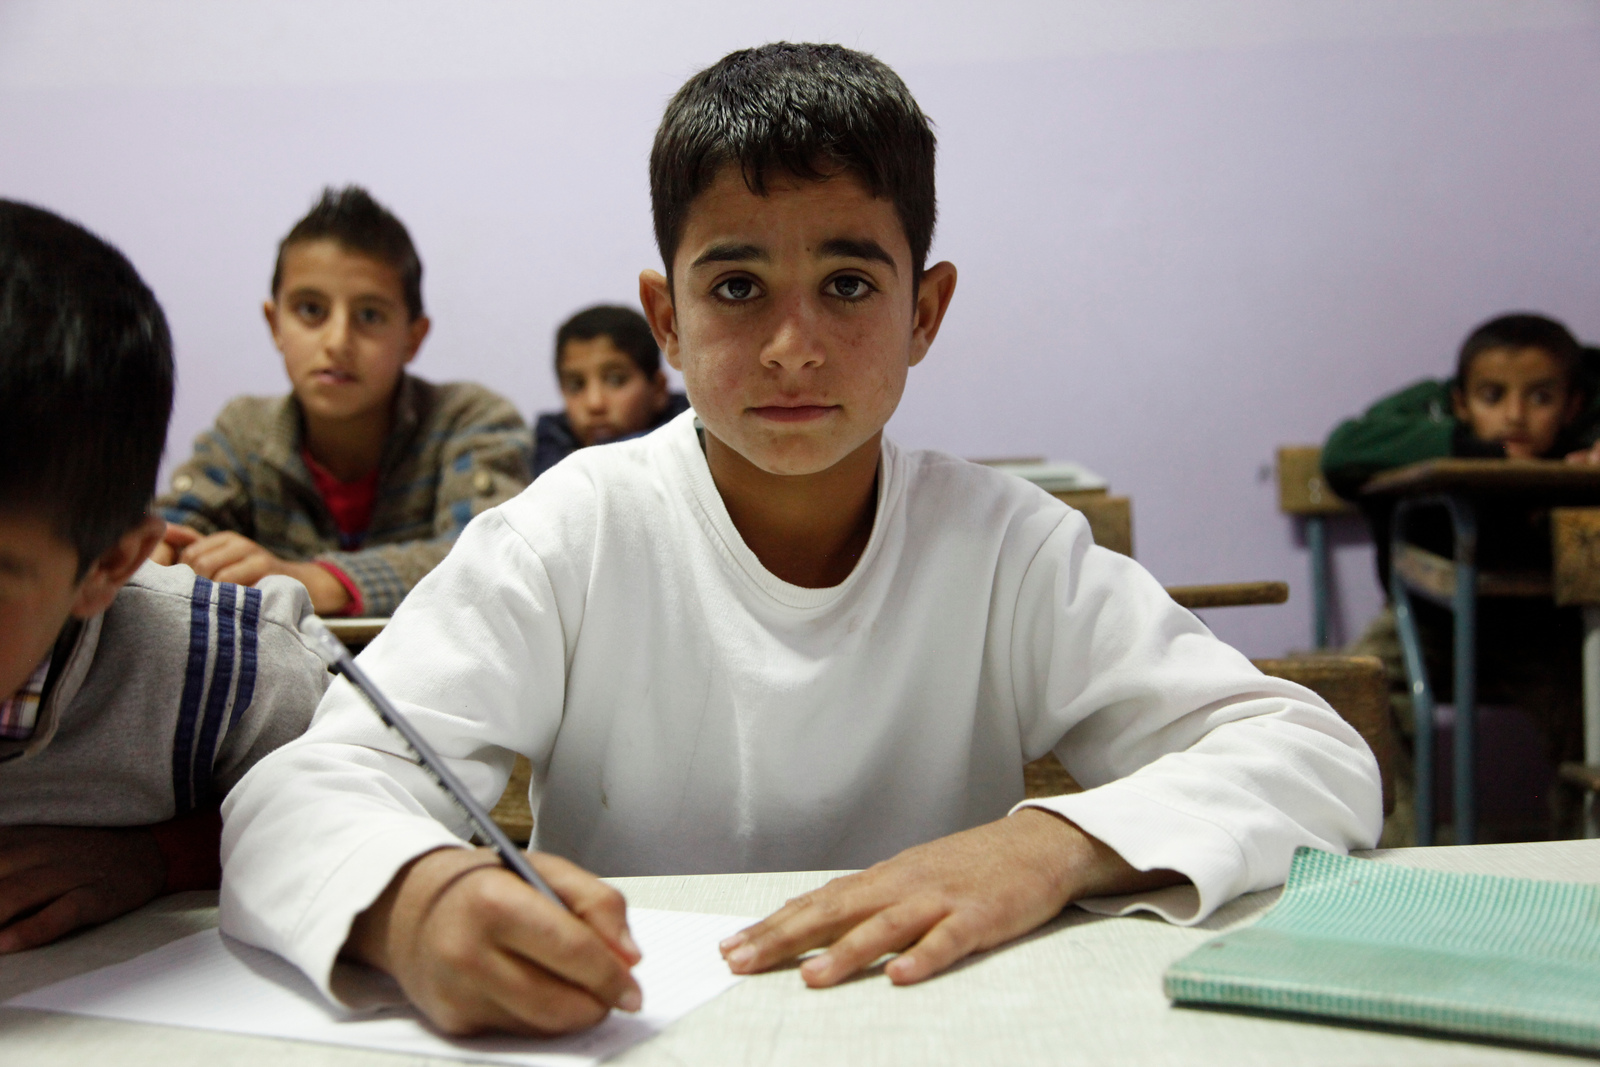 Syrian boy in school at a desk |  DFID - UK Department for International Development via Foter.com  -  CC BY